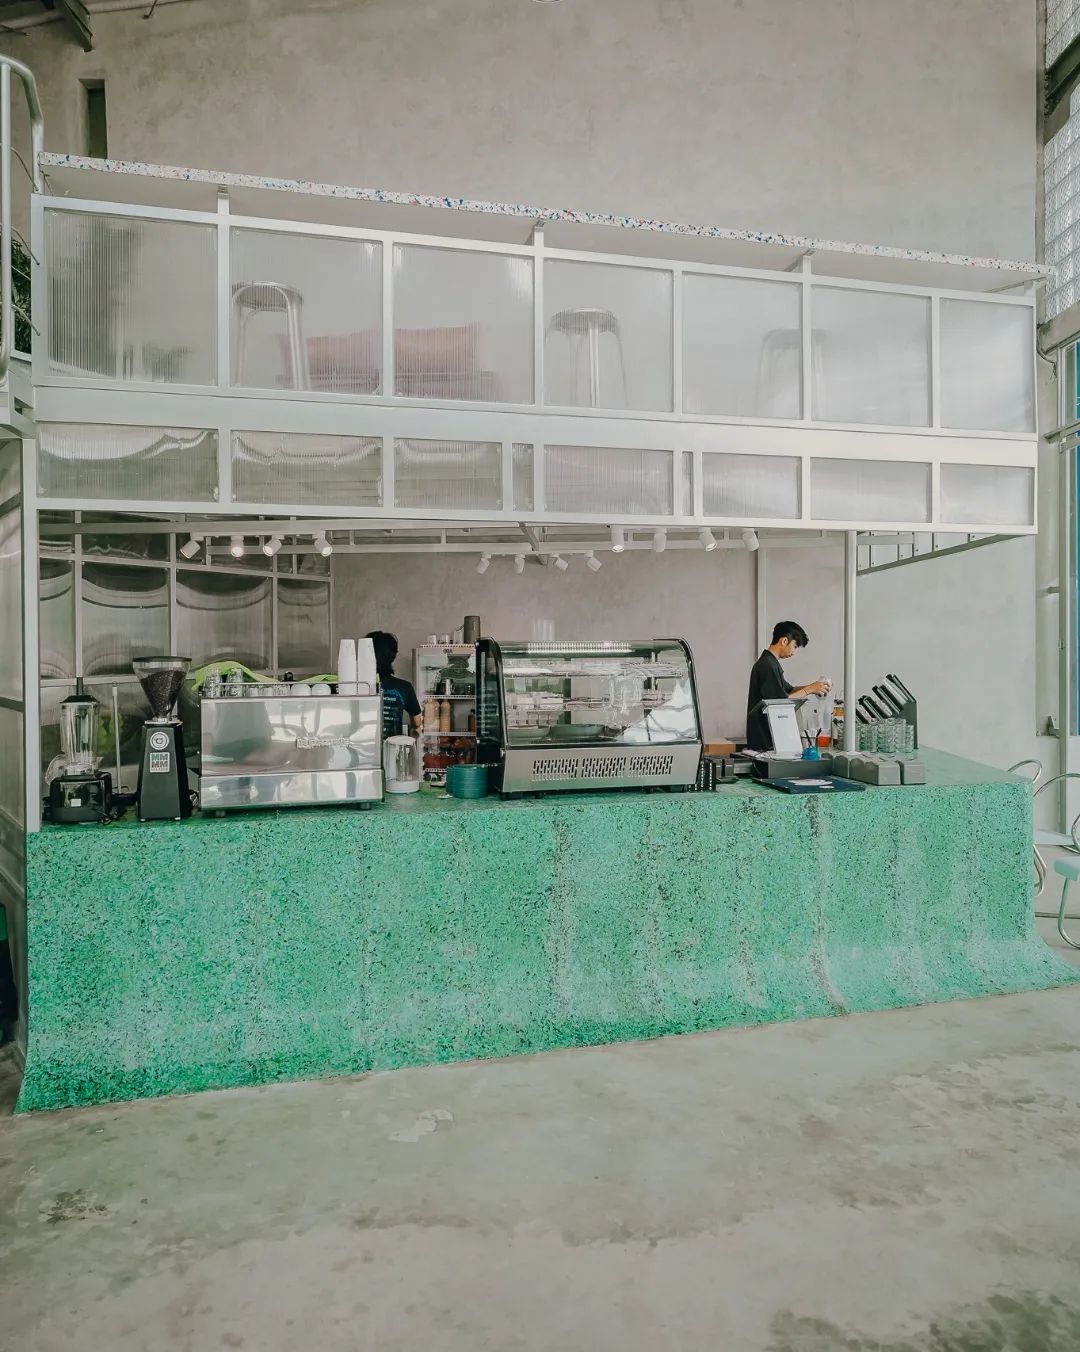 Review Monday Coffee Kiara Artha Park Image From @caffeinestories_